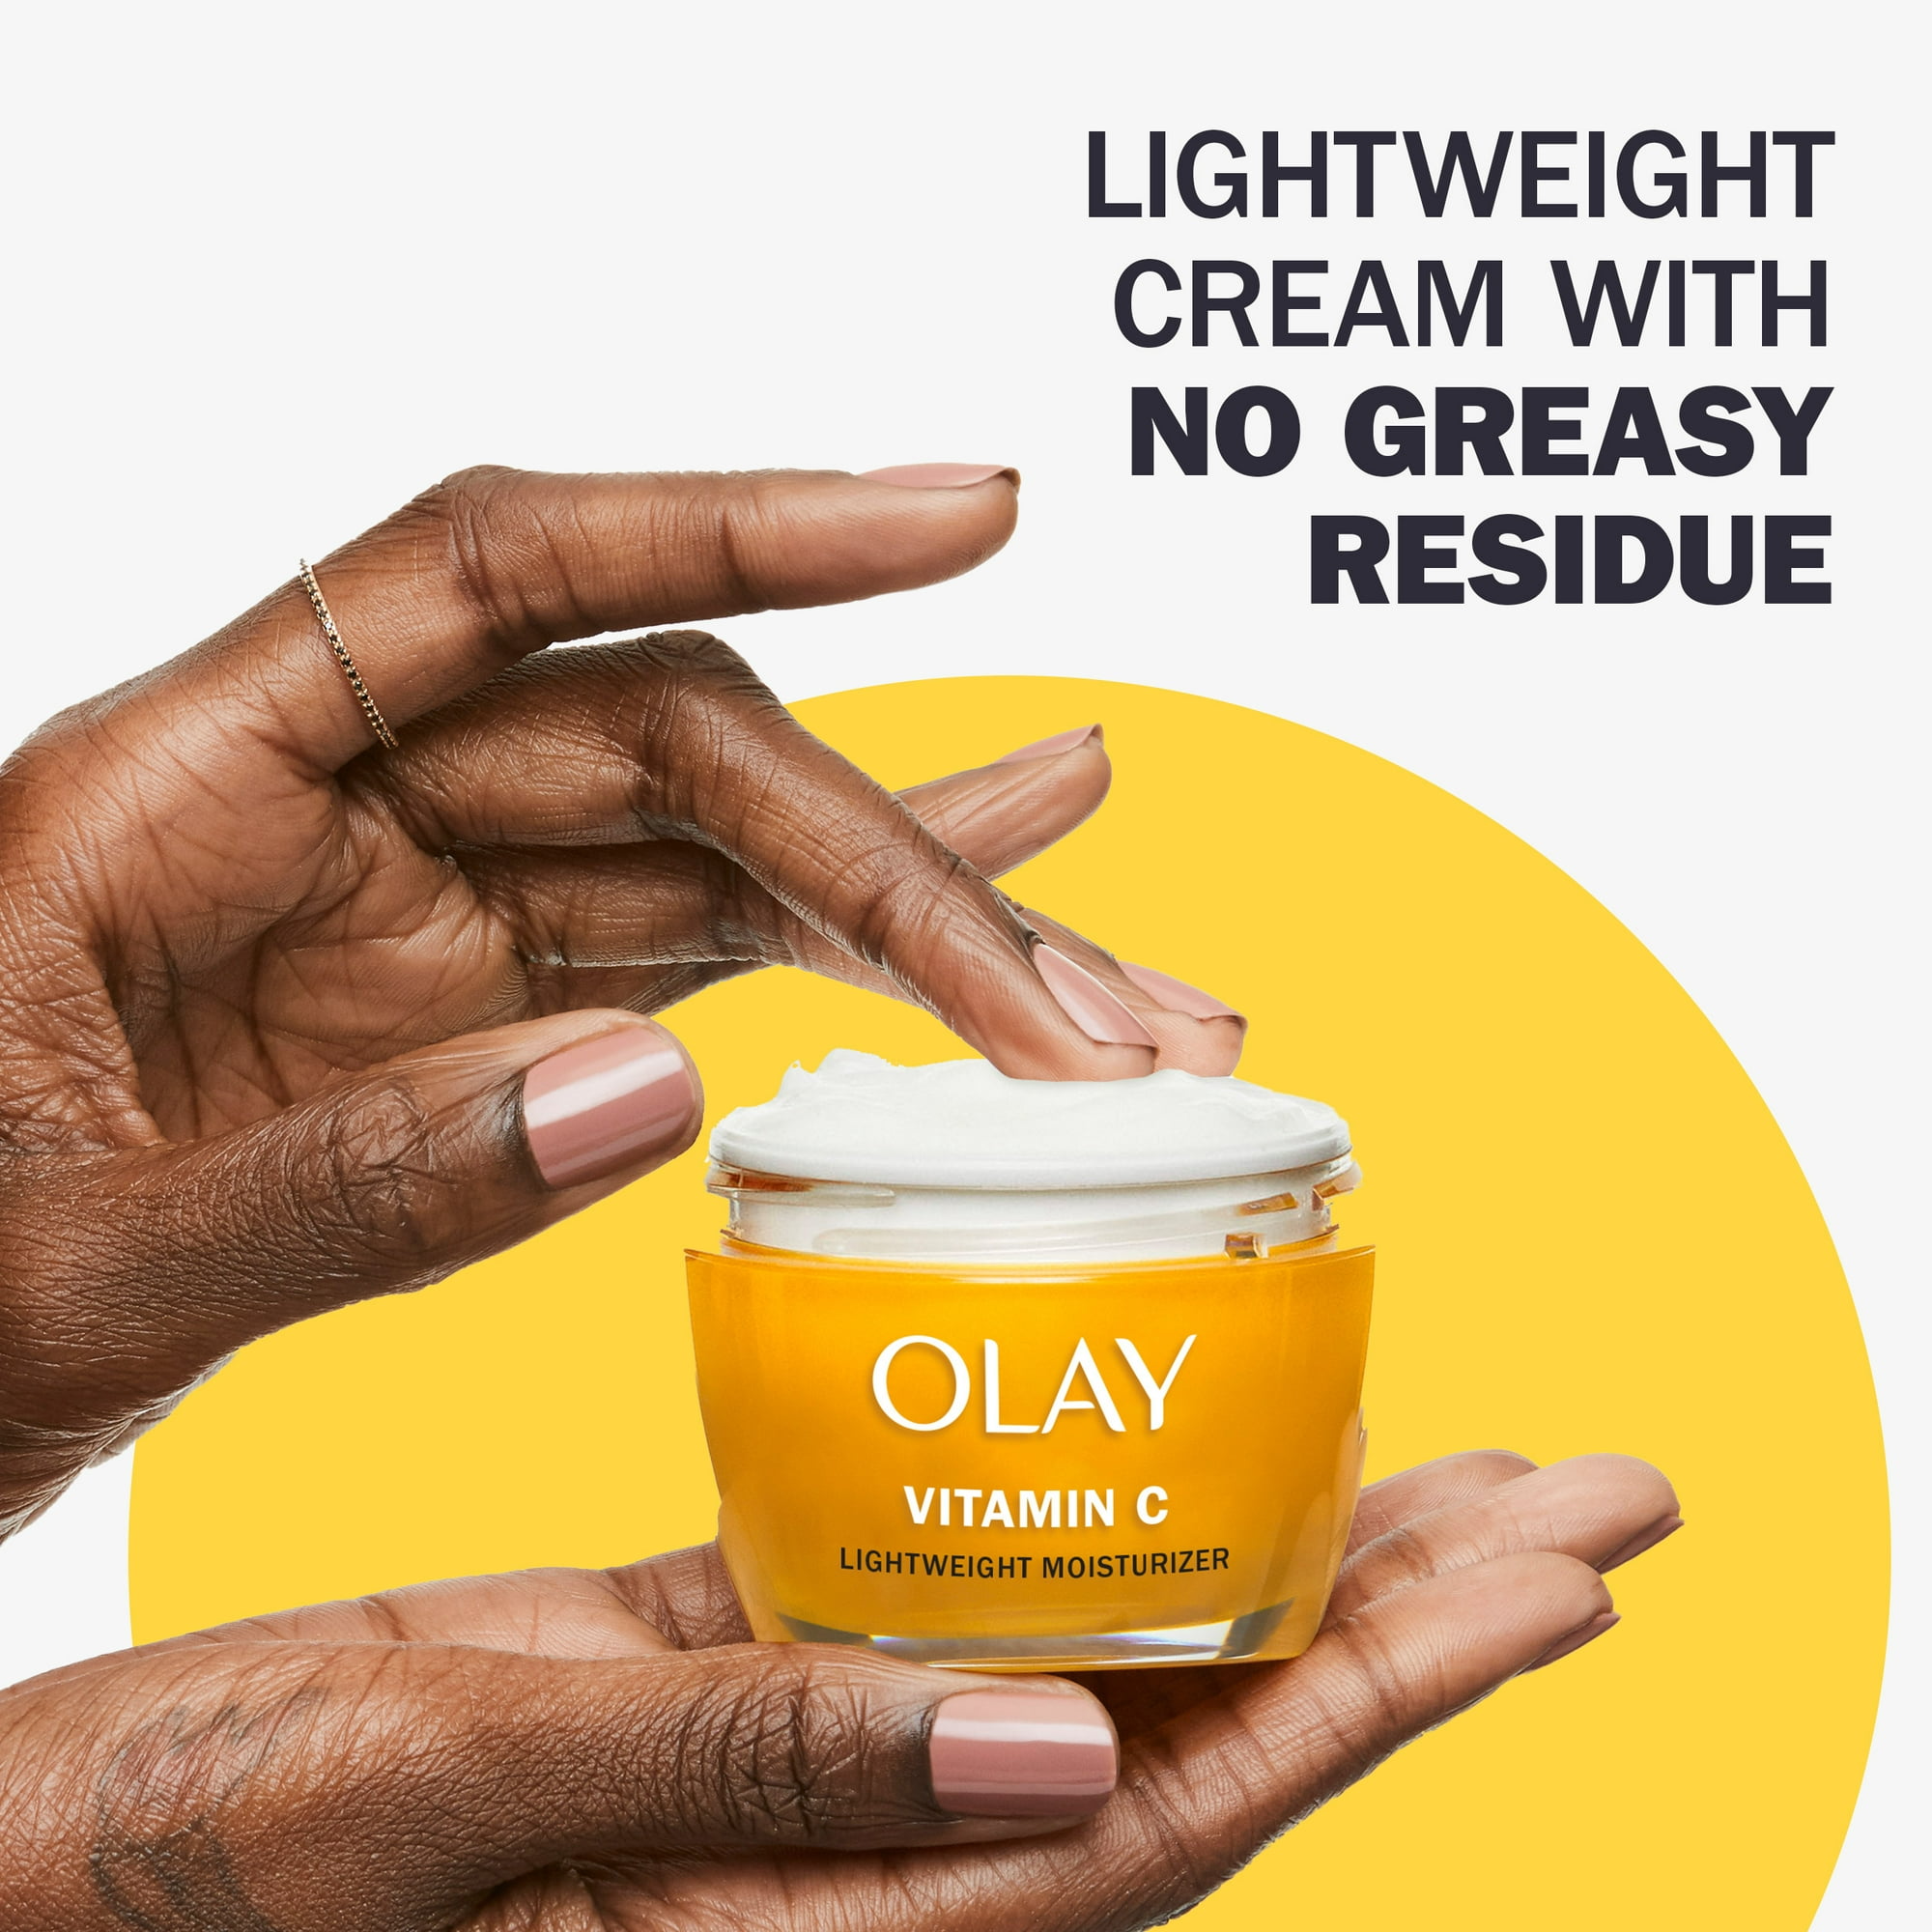 Olay Regenerist Vitamin C Face Moisturizer, Dull Skin Brightening Cream for All Skin Types, 1.7 oz